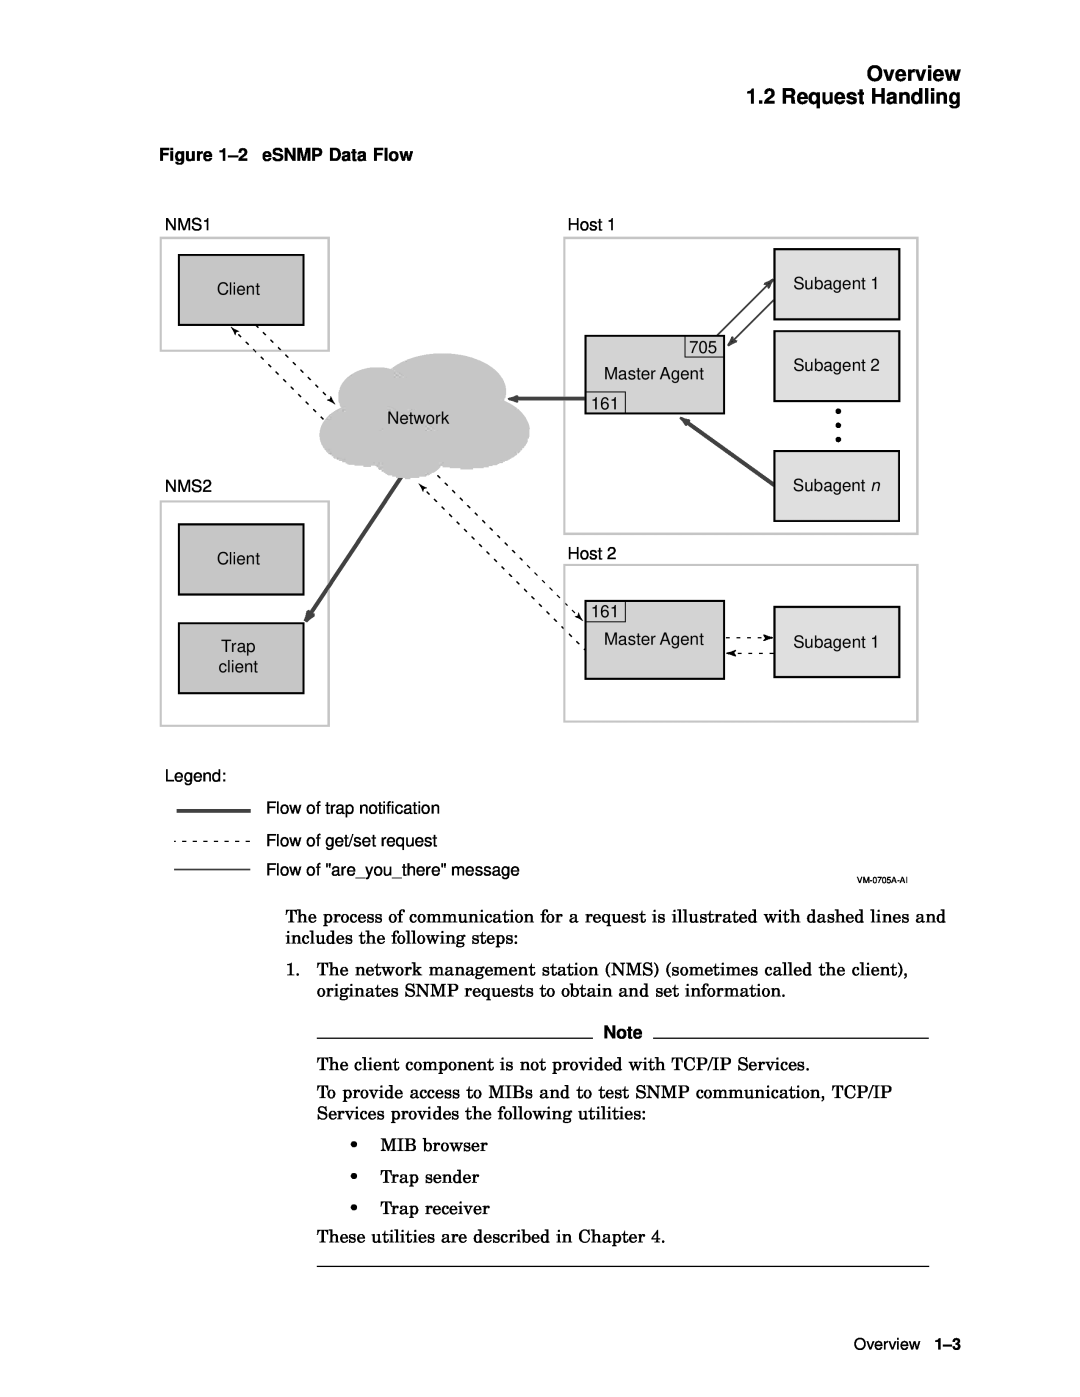 Compaq AAR04BCTE manual Overview 1.2 Request Handling, 2 eSNMP Data Flow 